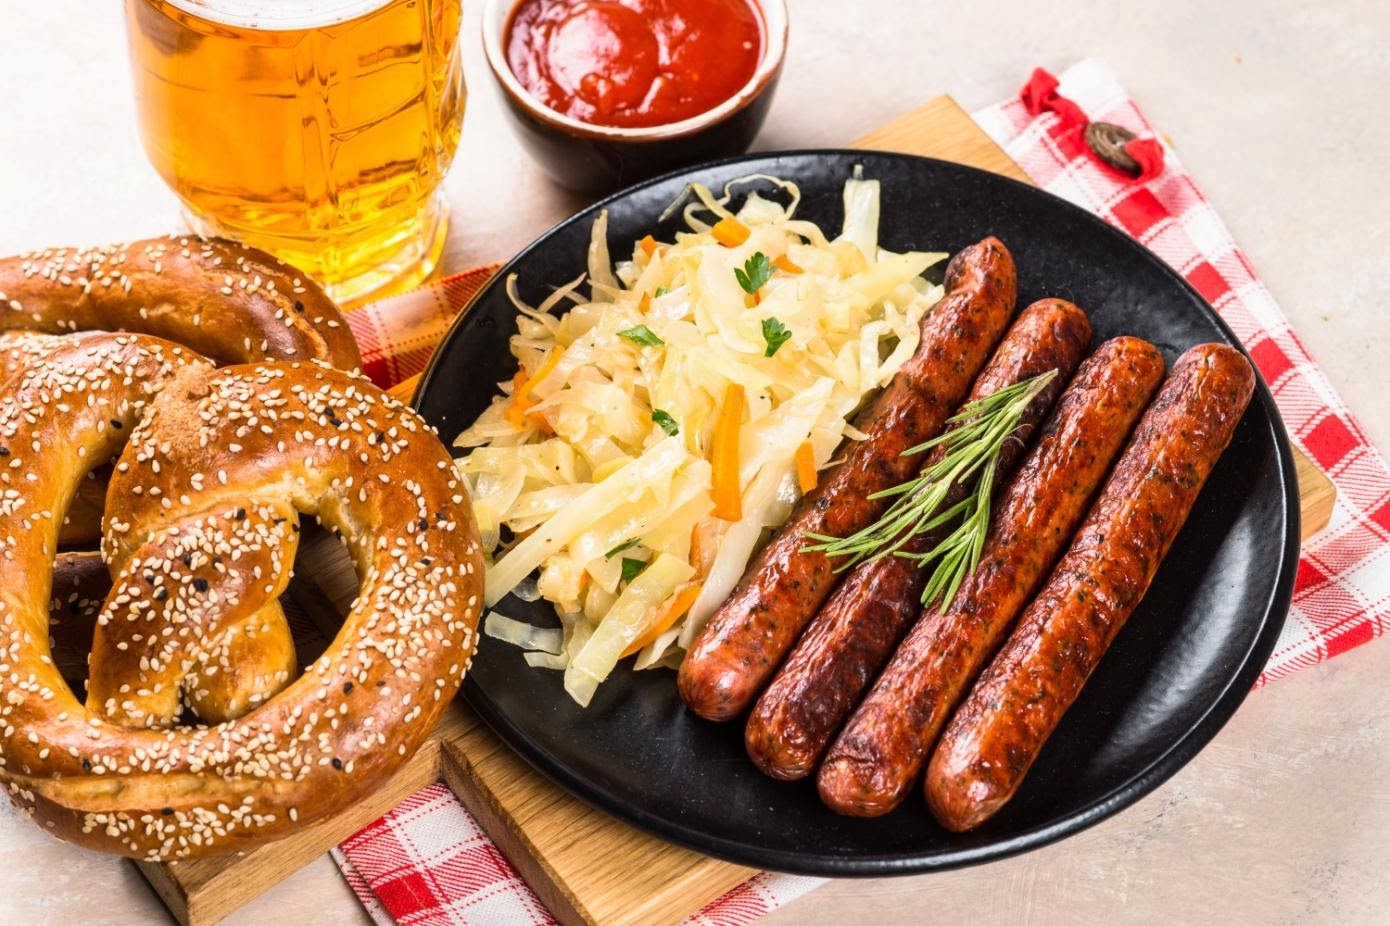 German Culture: Food